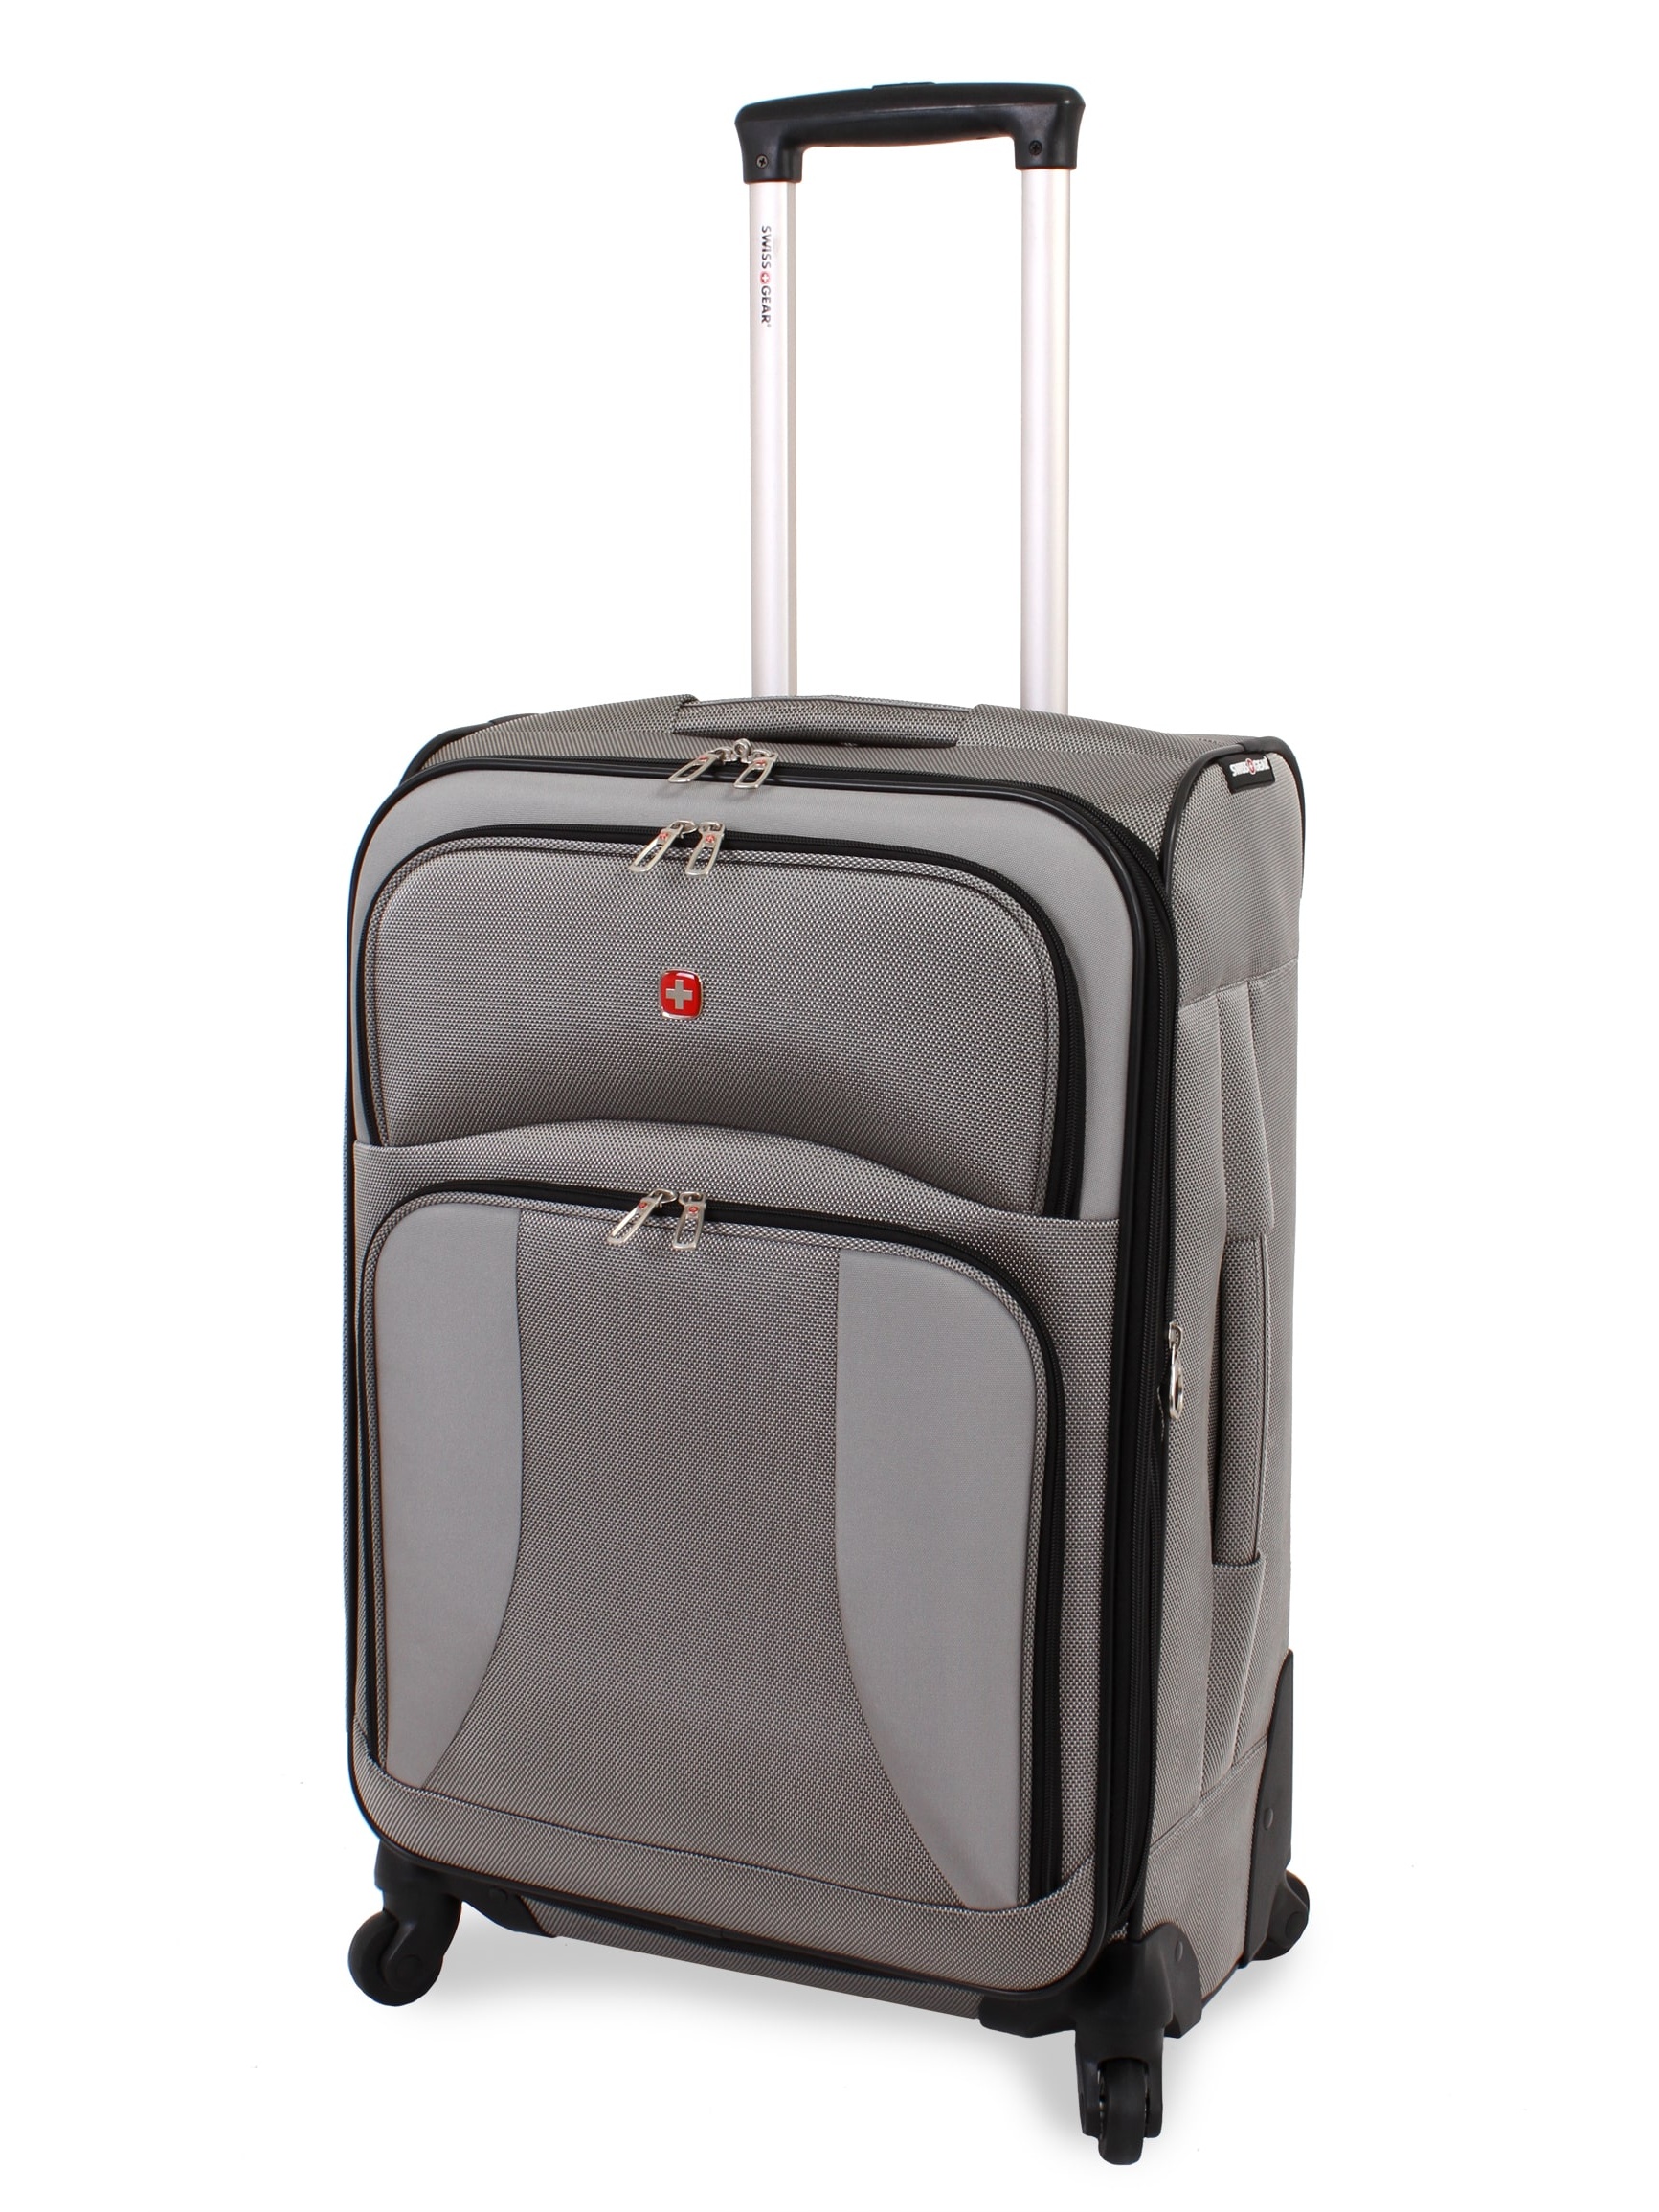 7211 24-inch Grey Medium Expandable Spinner Upright Suitcase - image 2 of 2